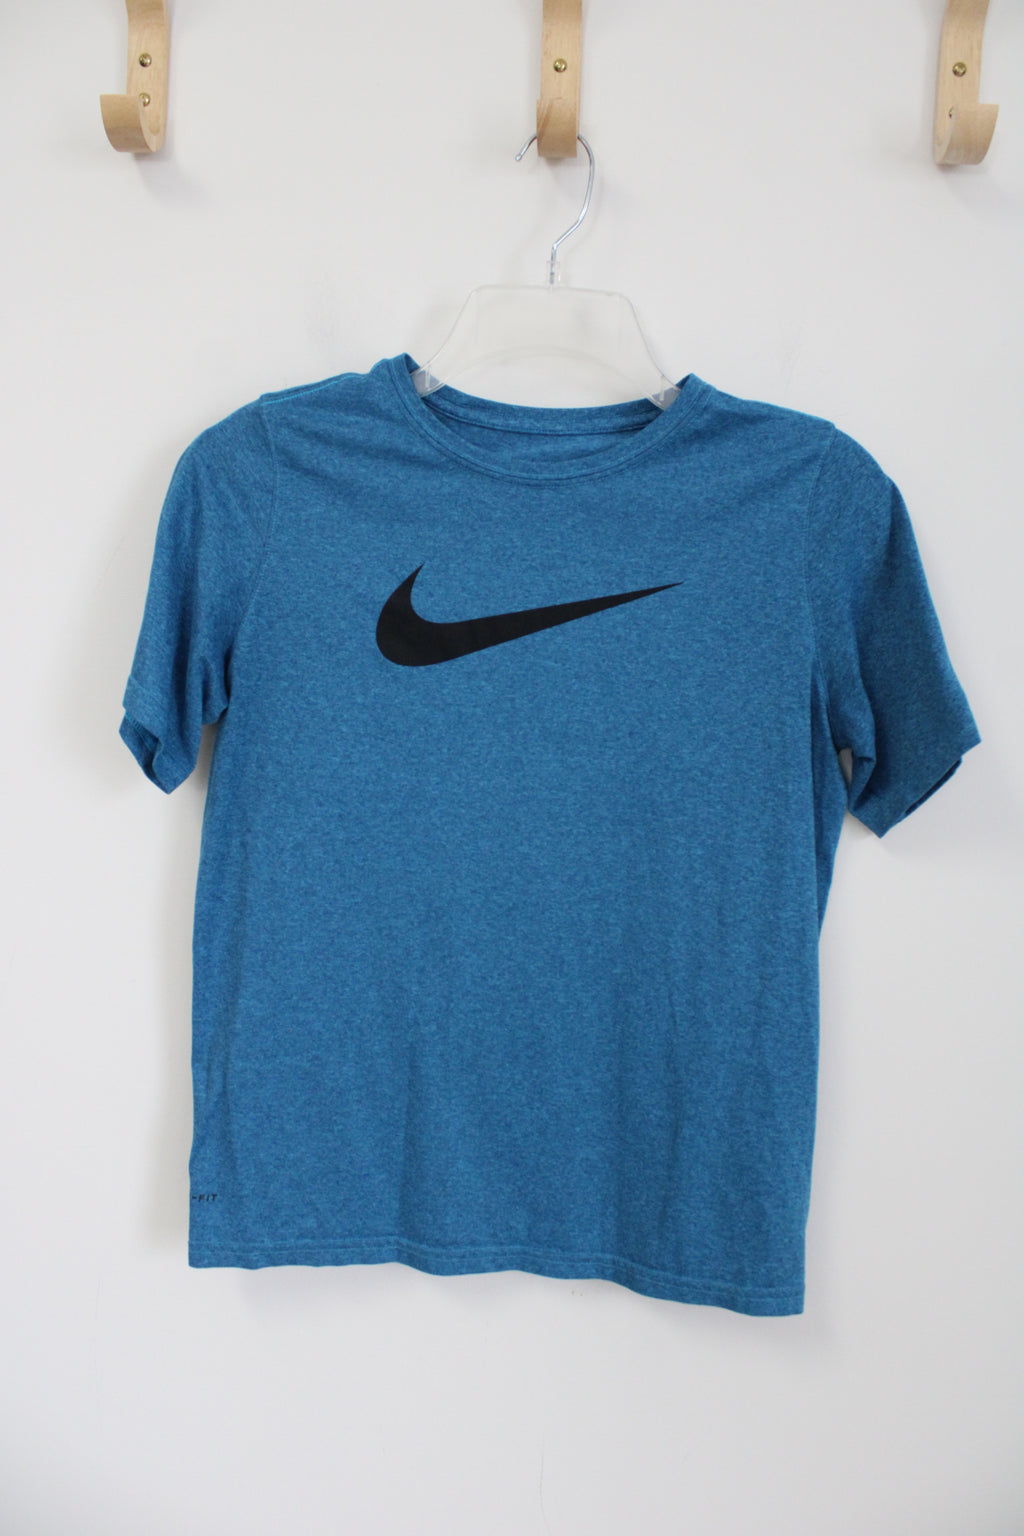 Nike Dri-Fit Blue Swoosh Shirt | Youth XL (18/20)